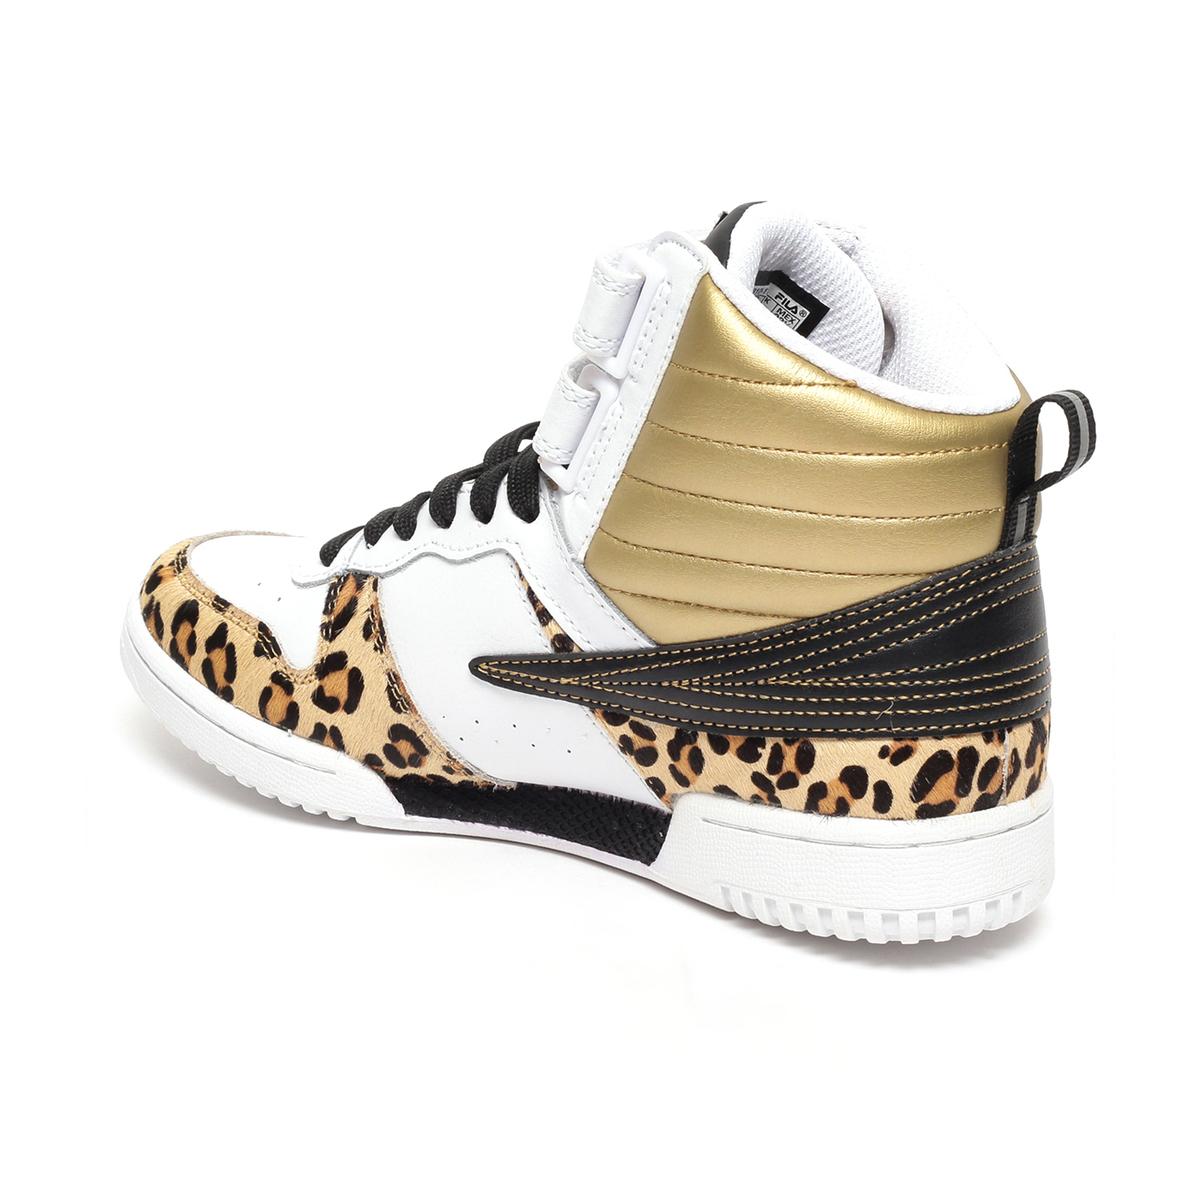 NWT Fila Women's Cheetah sneakers  Womens shoes sneakers, Sneaker  shopping, Sneakers